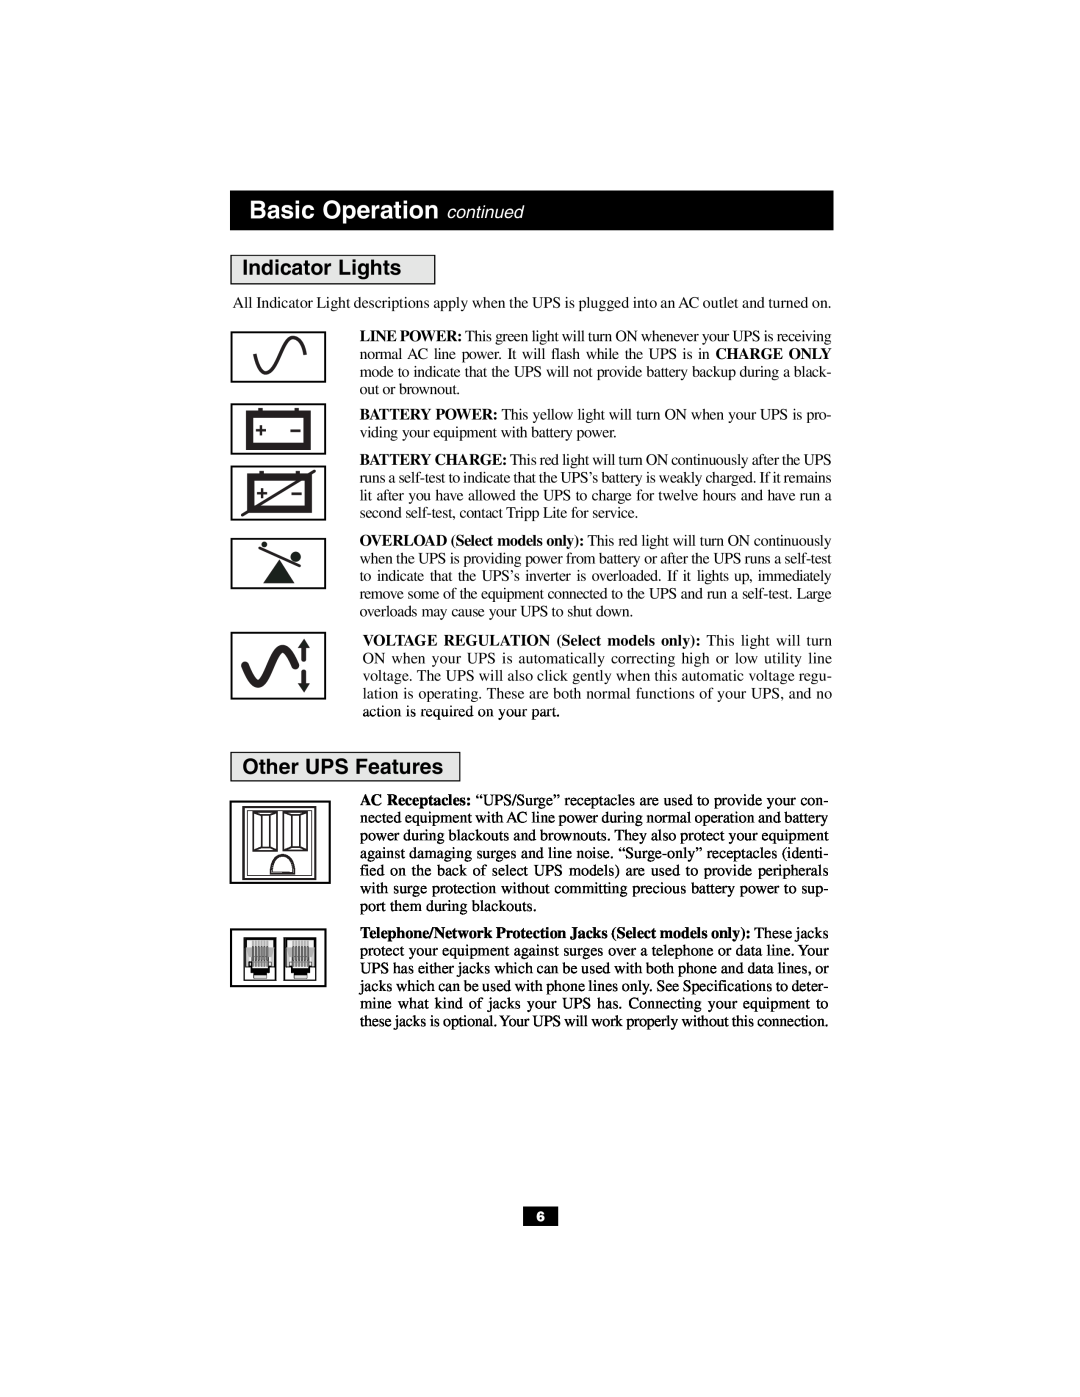 Tripp Lite OmniSmart & SmartPro USB owner manual Indicator Lights, Other UPS Features, Basic Operation continued 